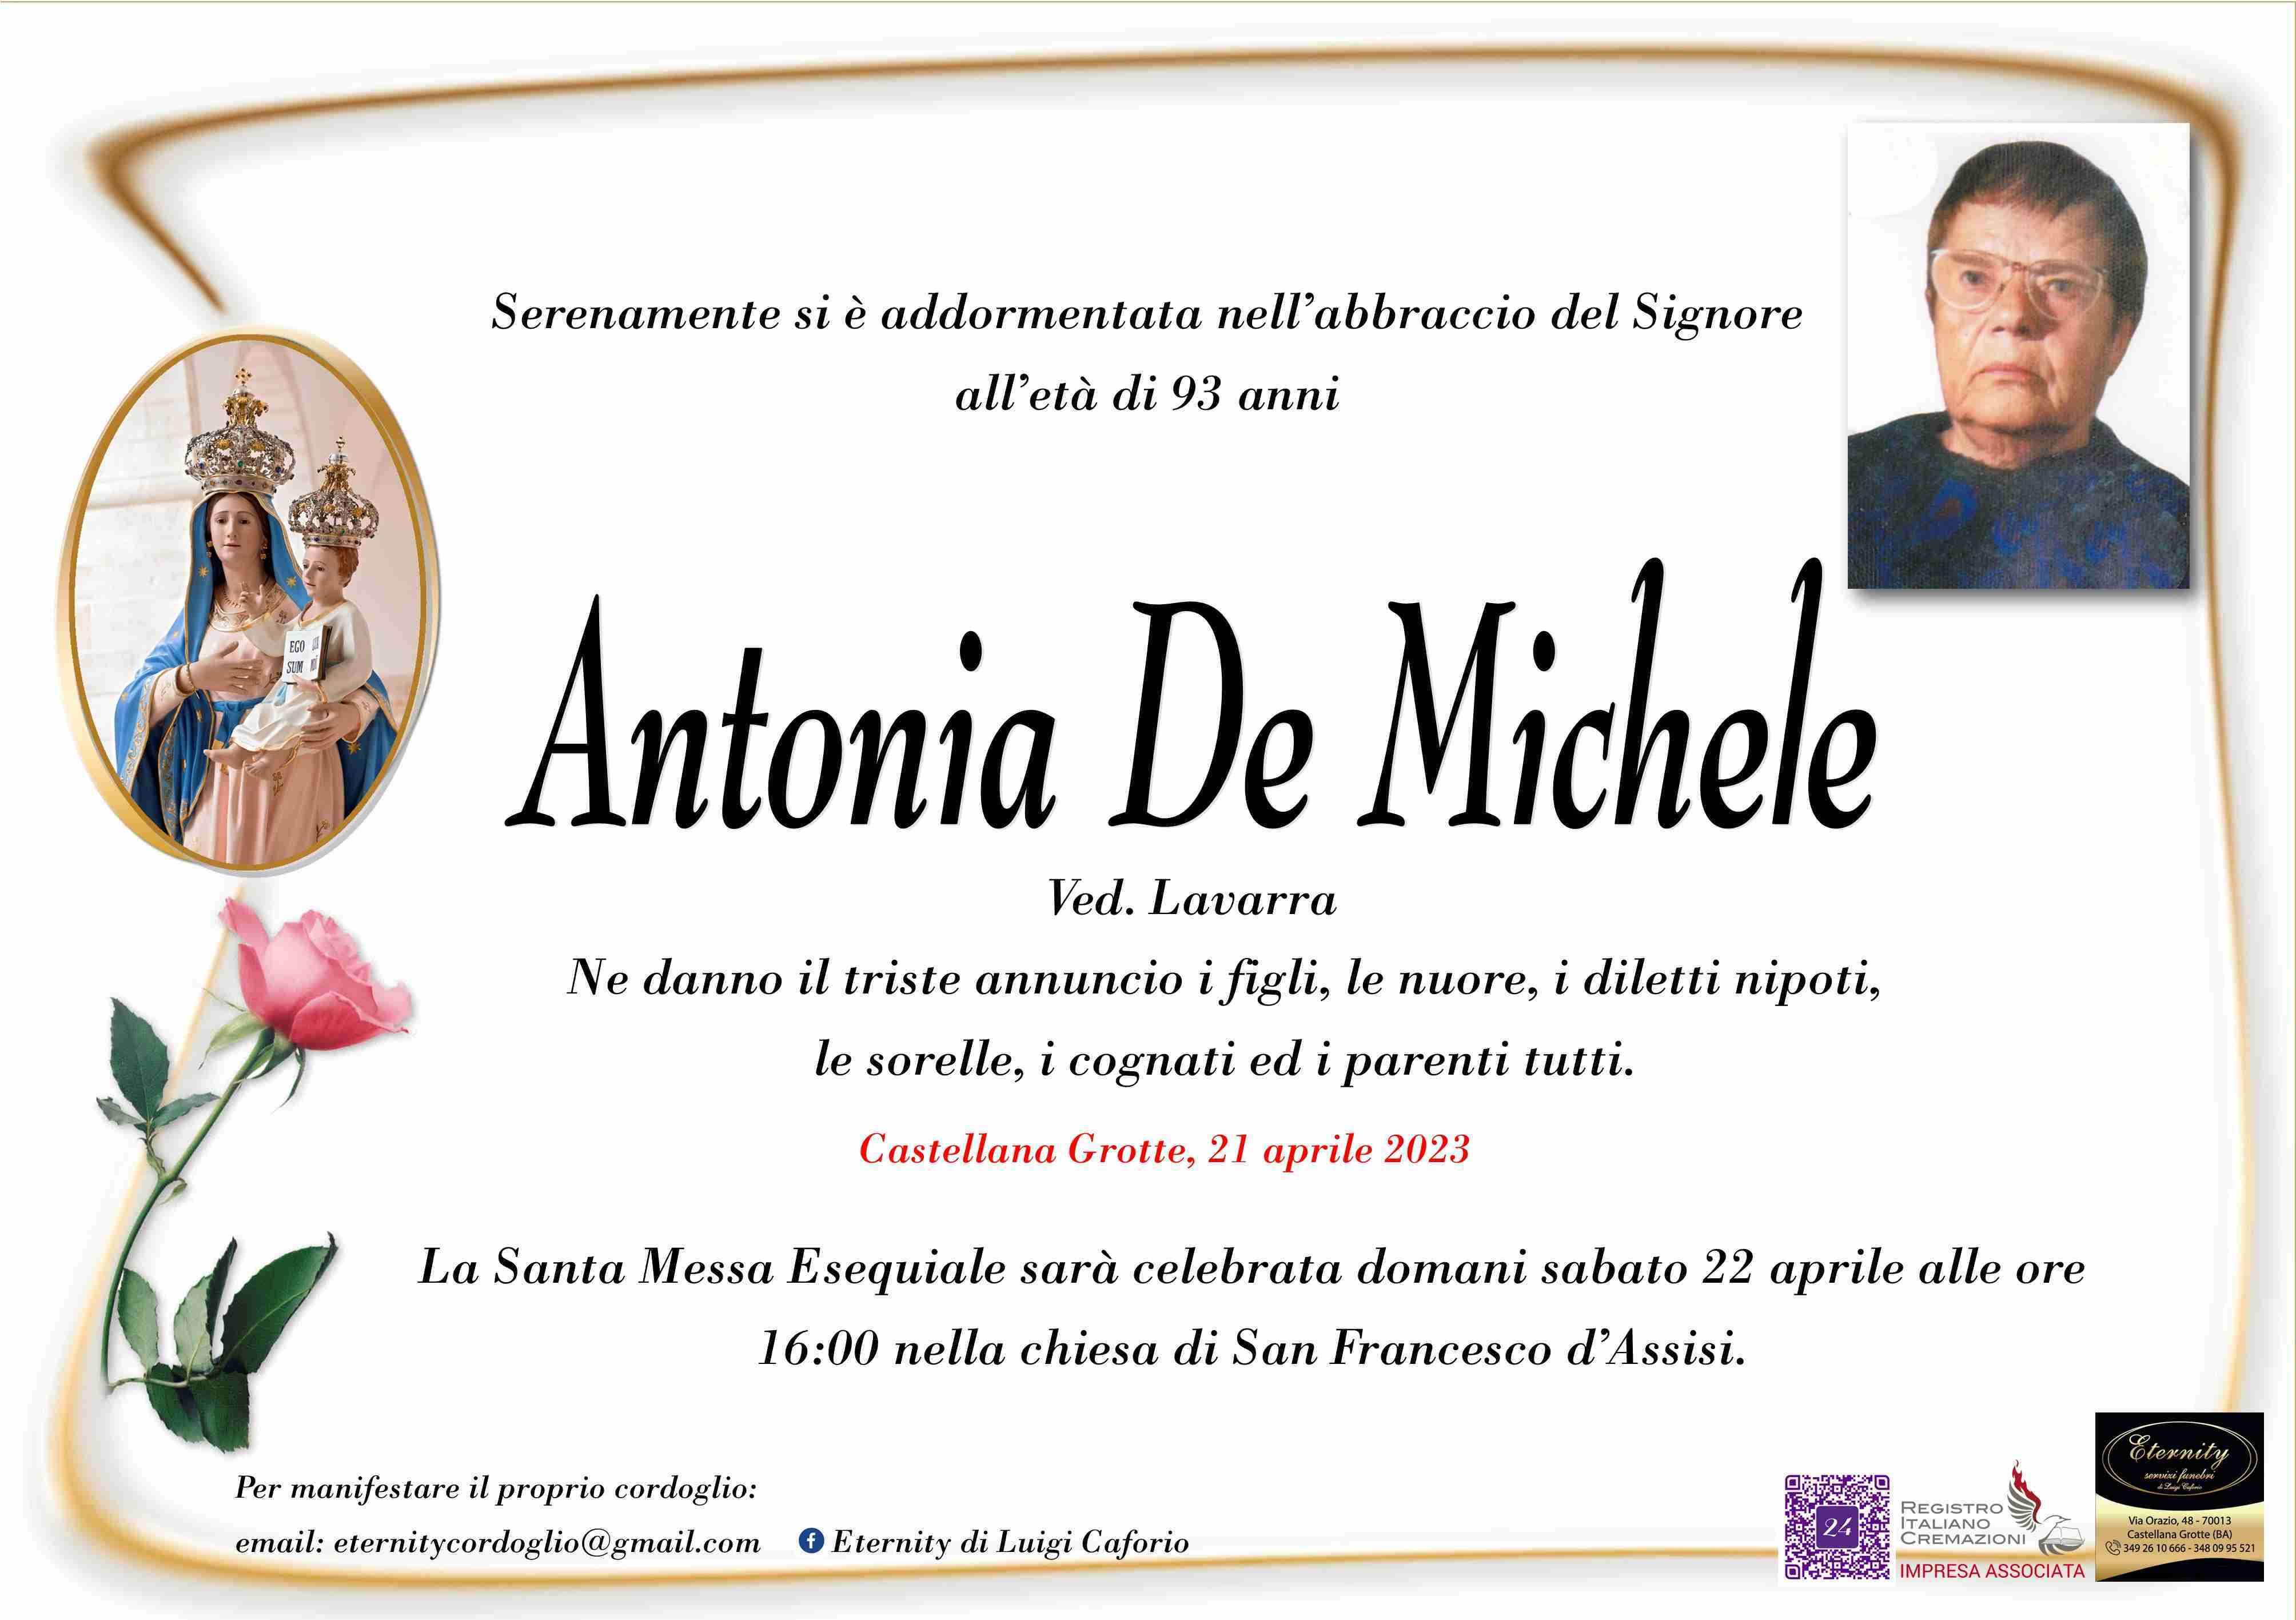 Antonia De Michele